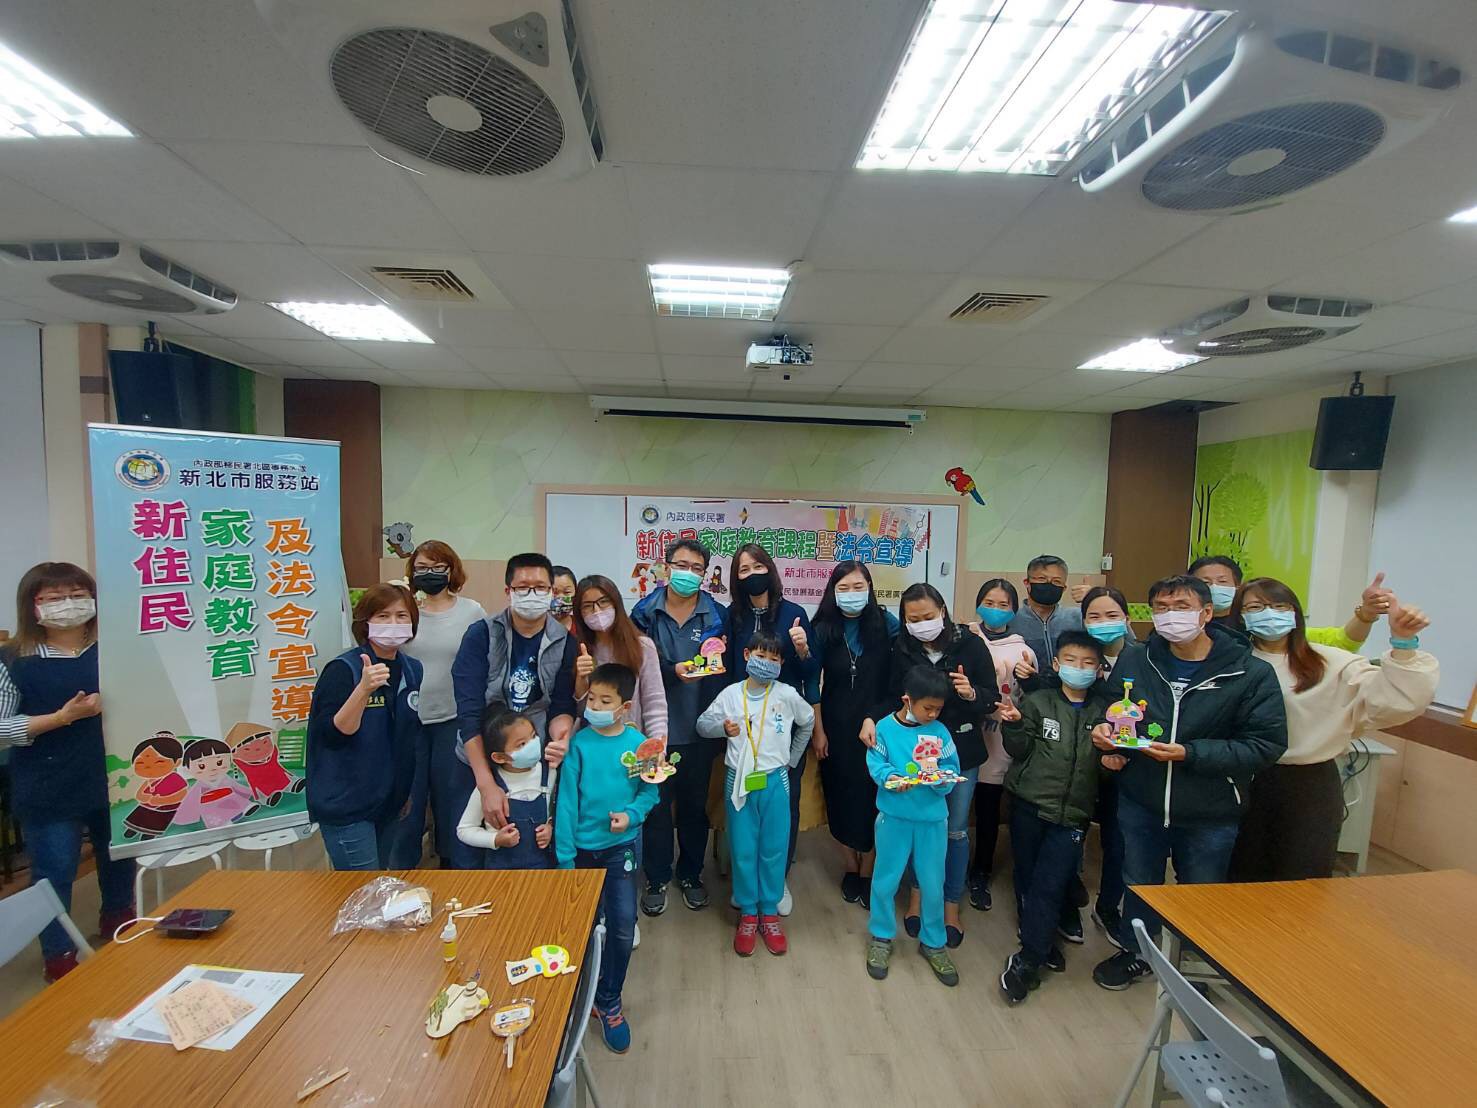 Kantor Layanan Kota New Taipei NIA mengadakan kursus pendidikan keluarga orang tua-anak di sekolah dasar Ren-ai di distrik Luzhou pada tanggal 5 Maret 2021. Sumber : New Taipei City Service Center